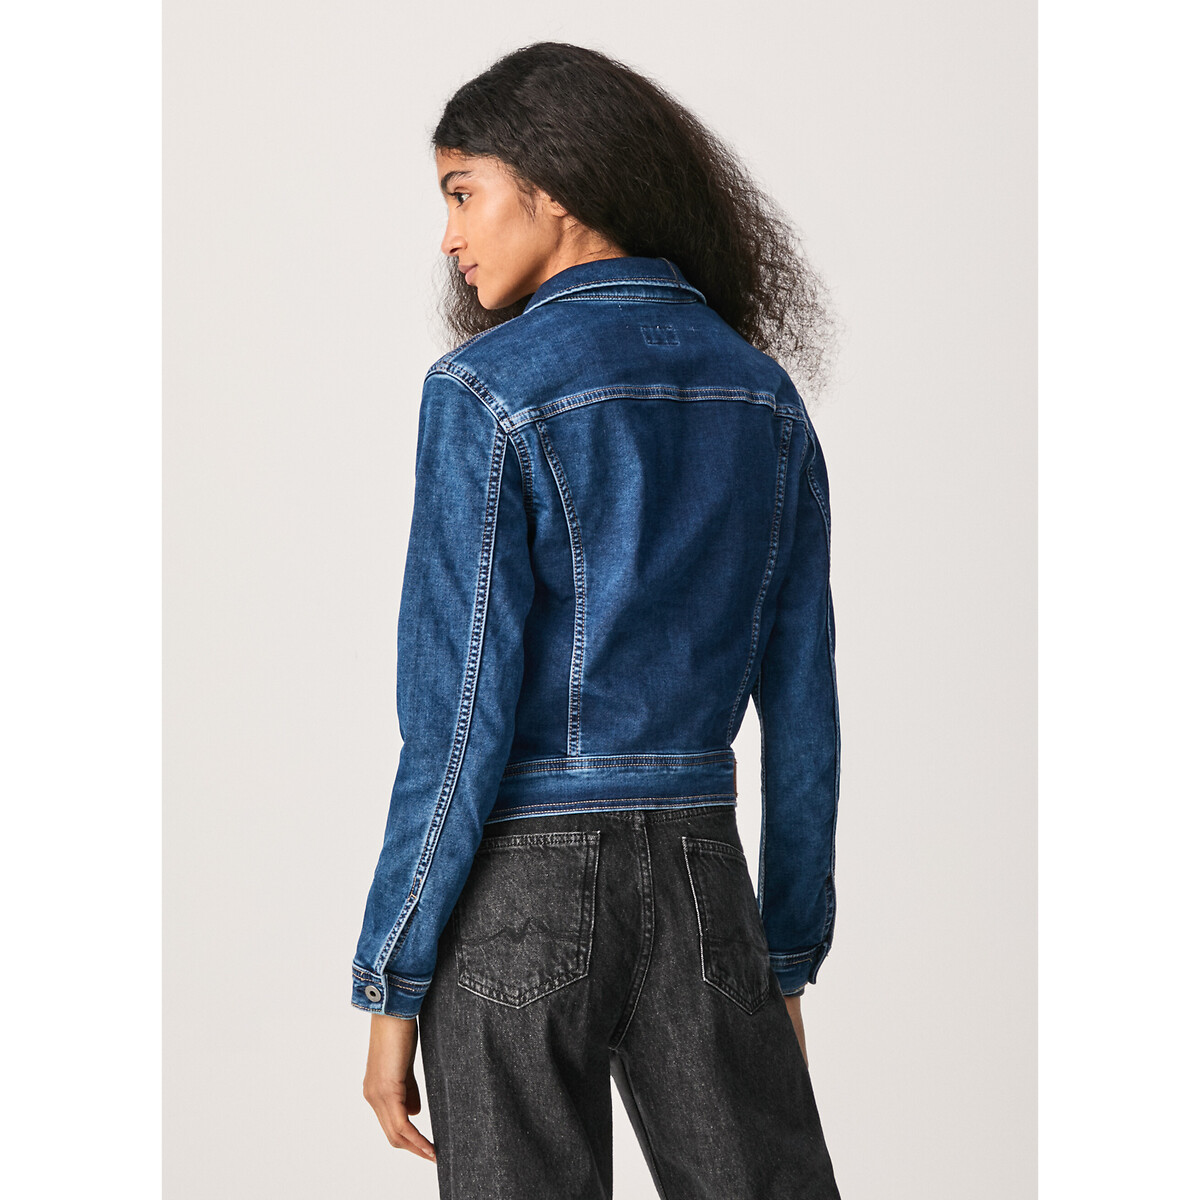 Жакет Короткий из джинсовой ткани XS синий LaRedoute, размер XS - фото 2